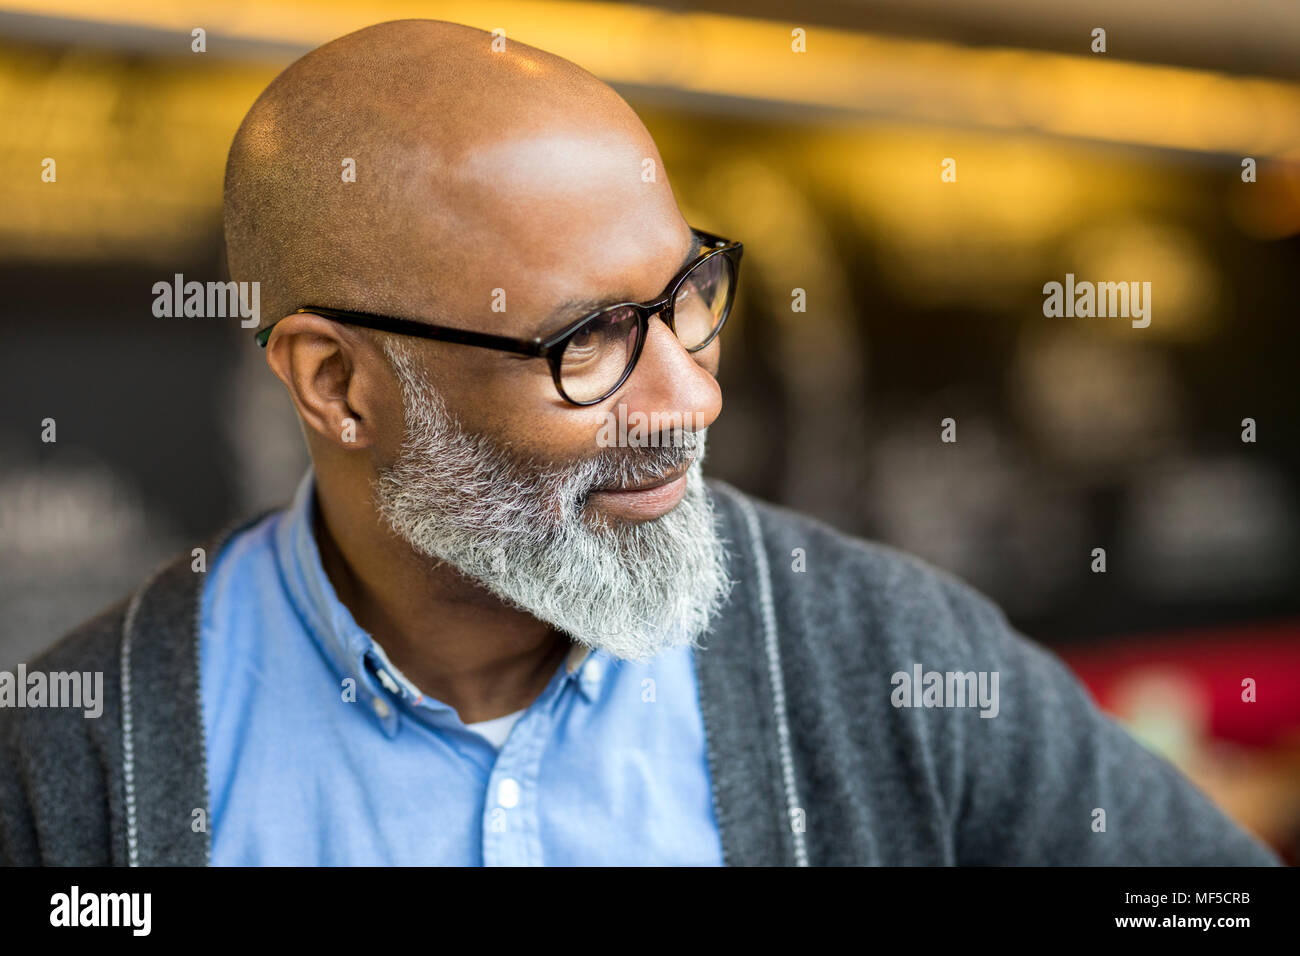 Portrait of bald man with grey beard wearing glasses Stock Photo